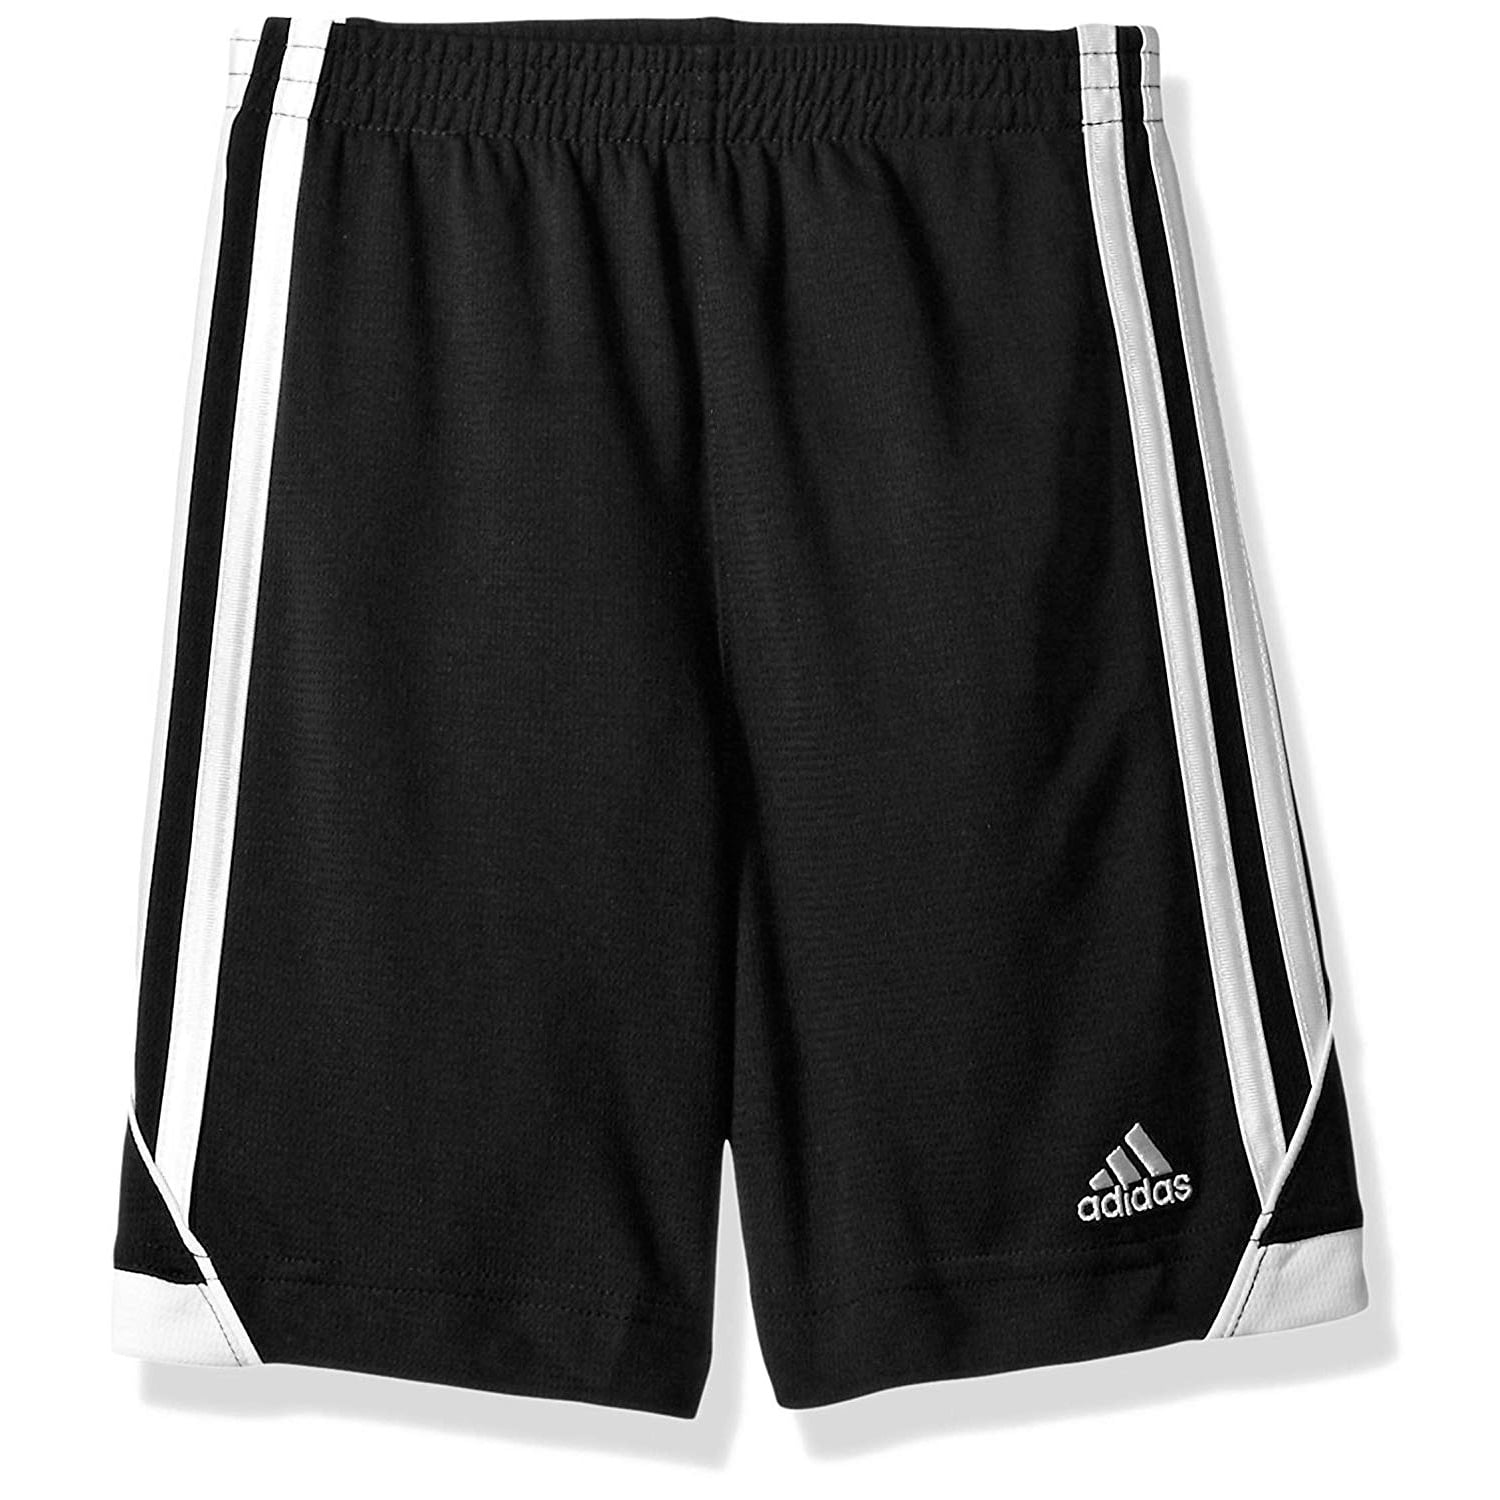 Adidas Boys Athletic Shorts (Black, Small-8) - Walmart.com